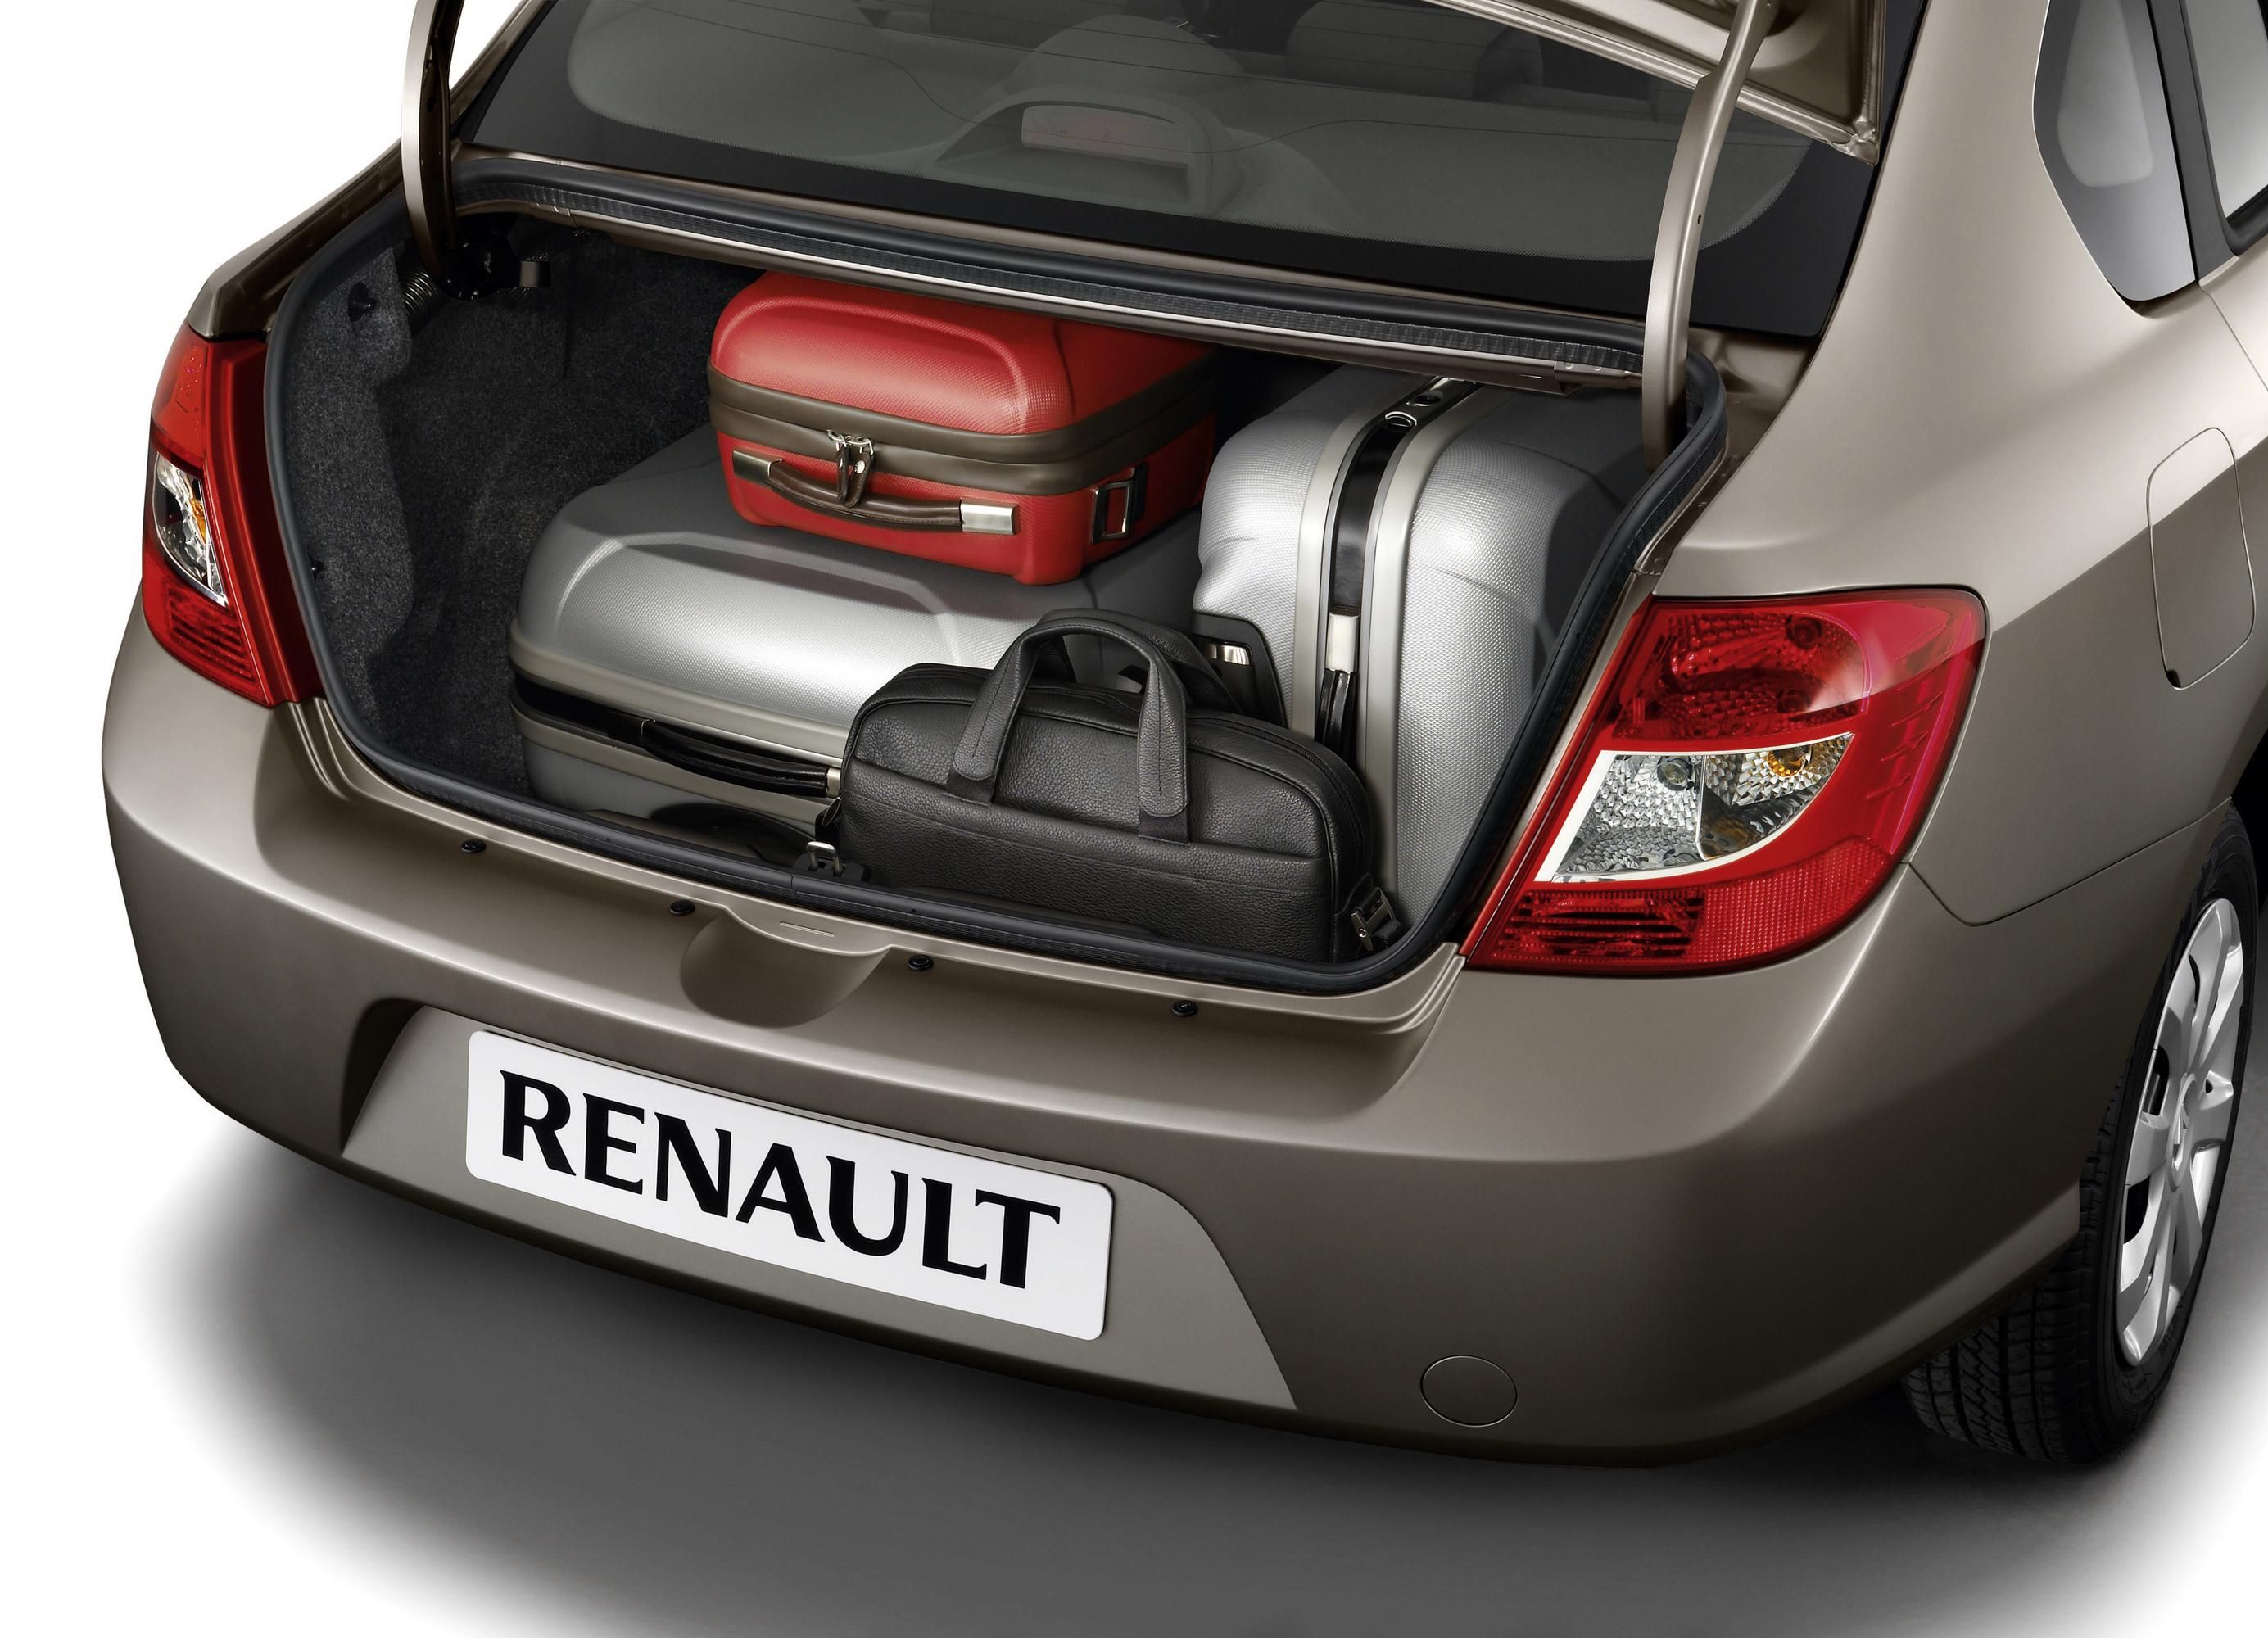 2009 Renault Symbol